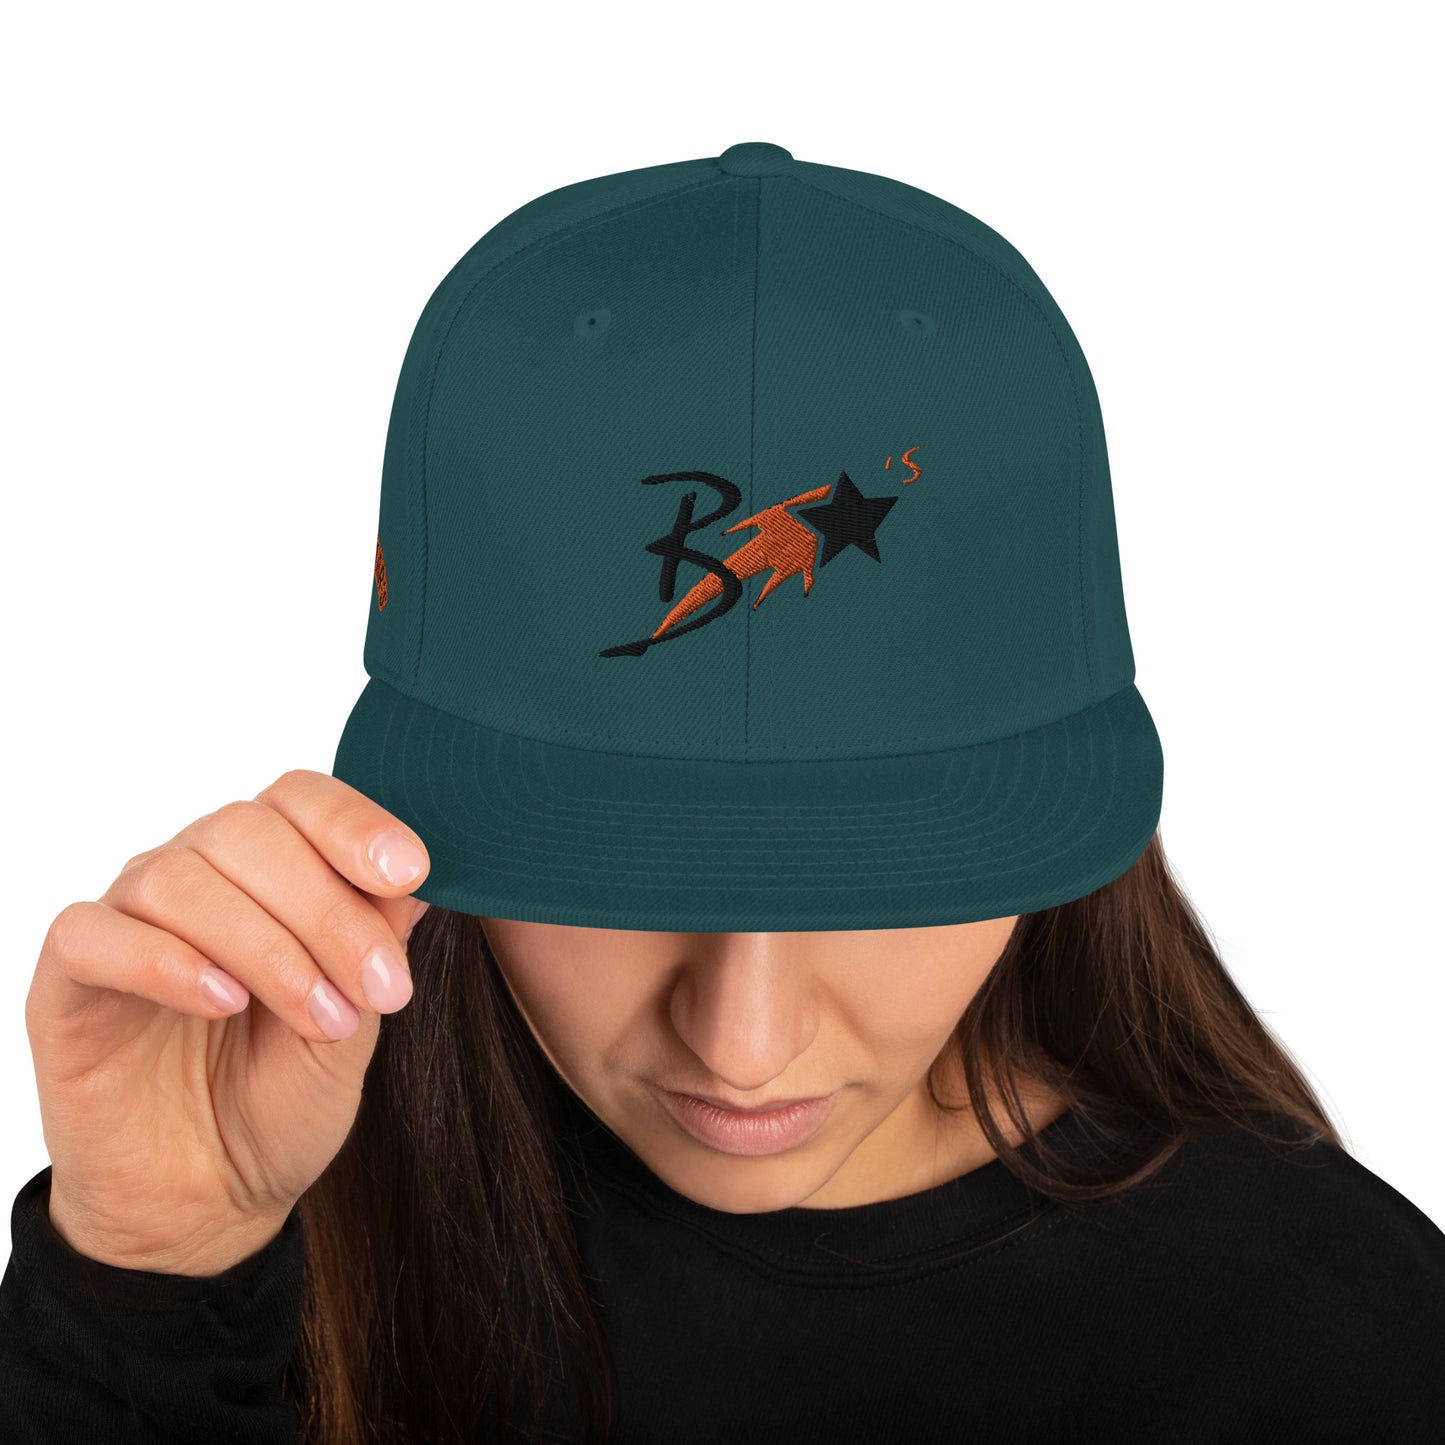 Black Star's Snapback Hat